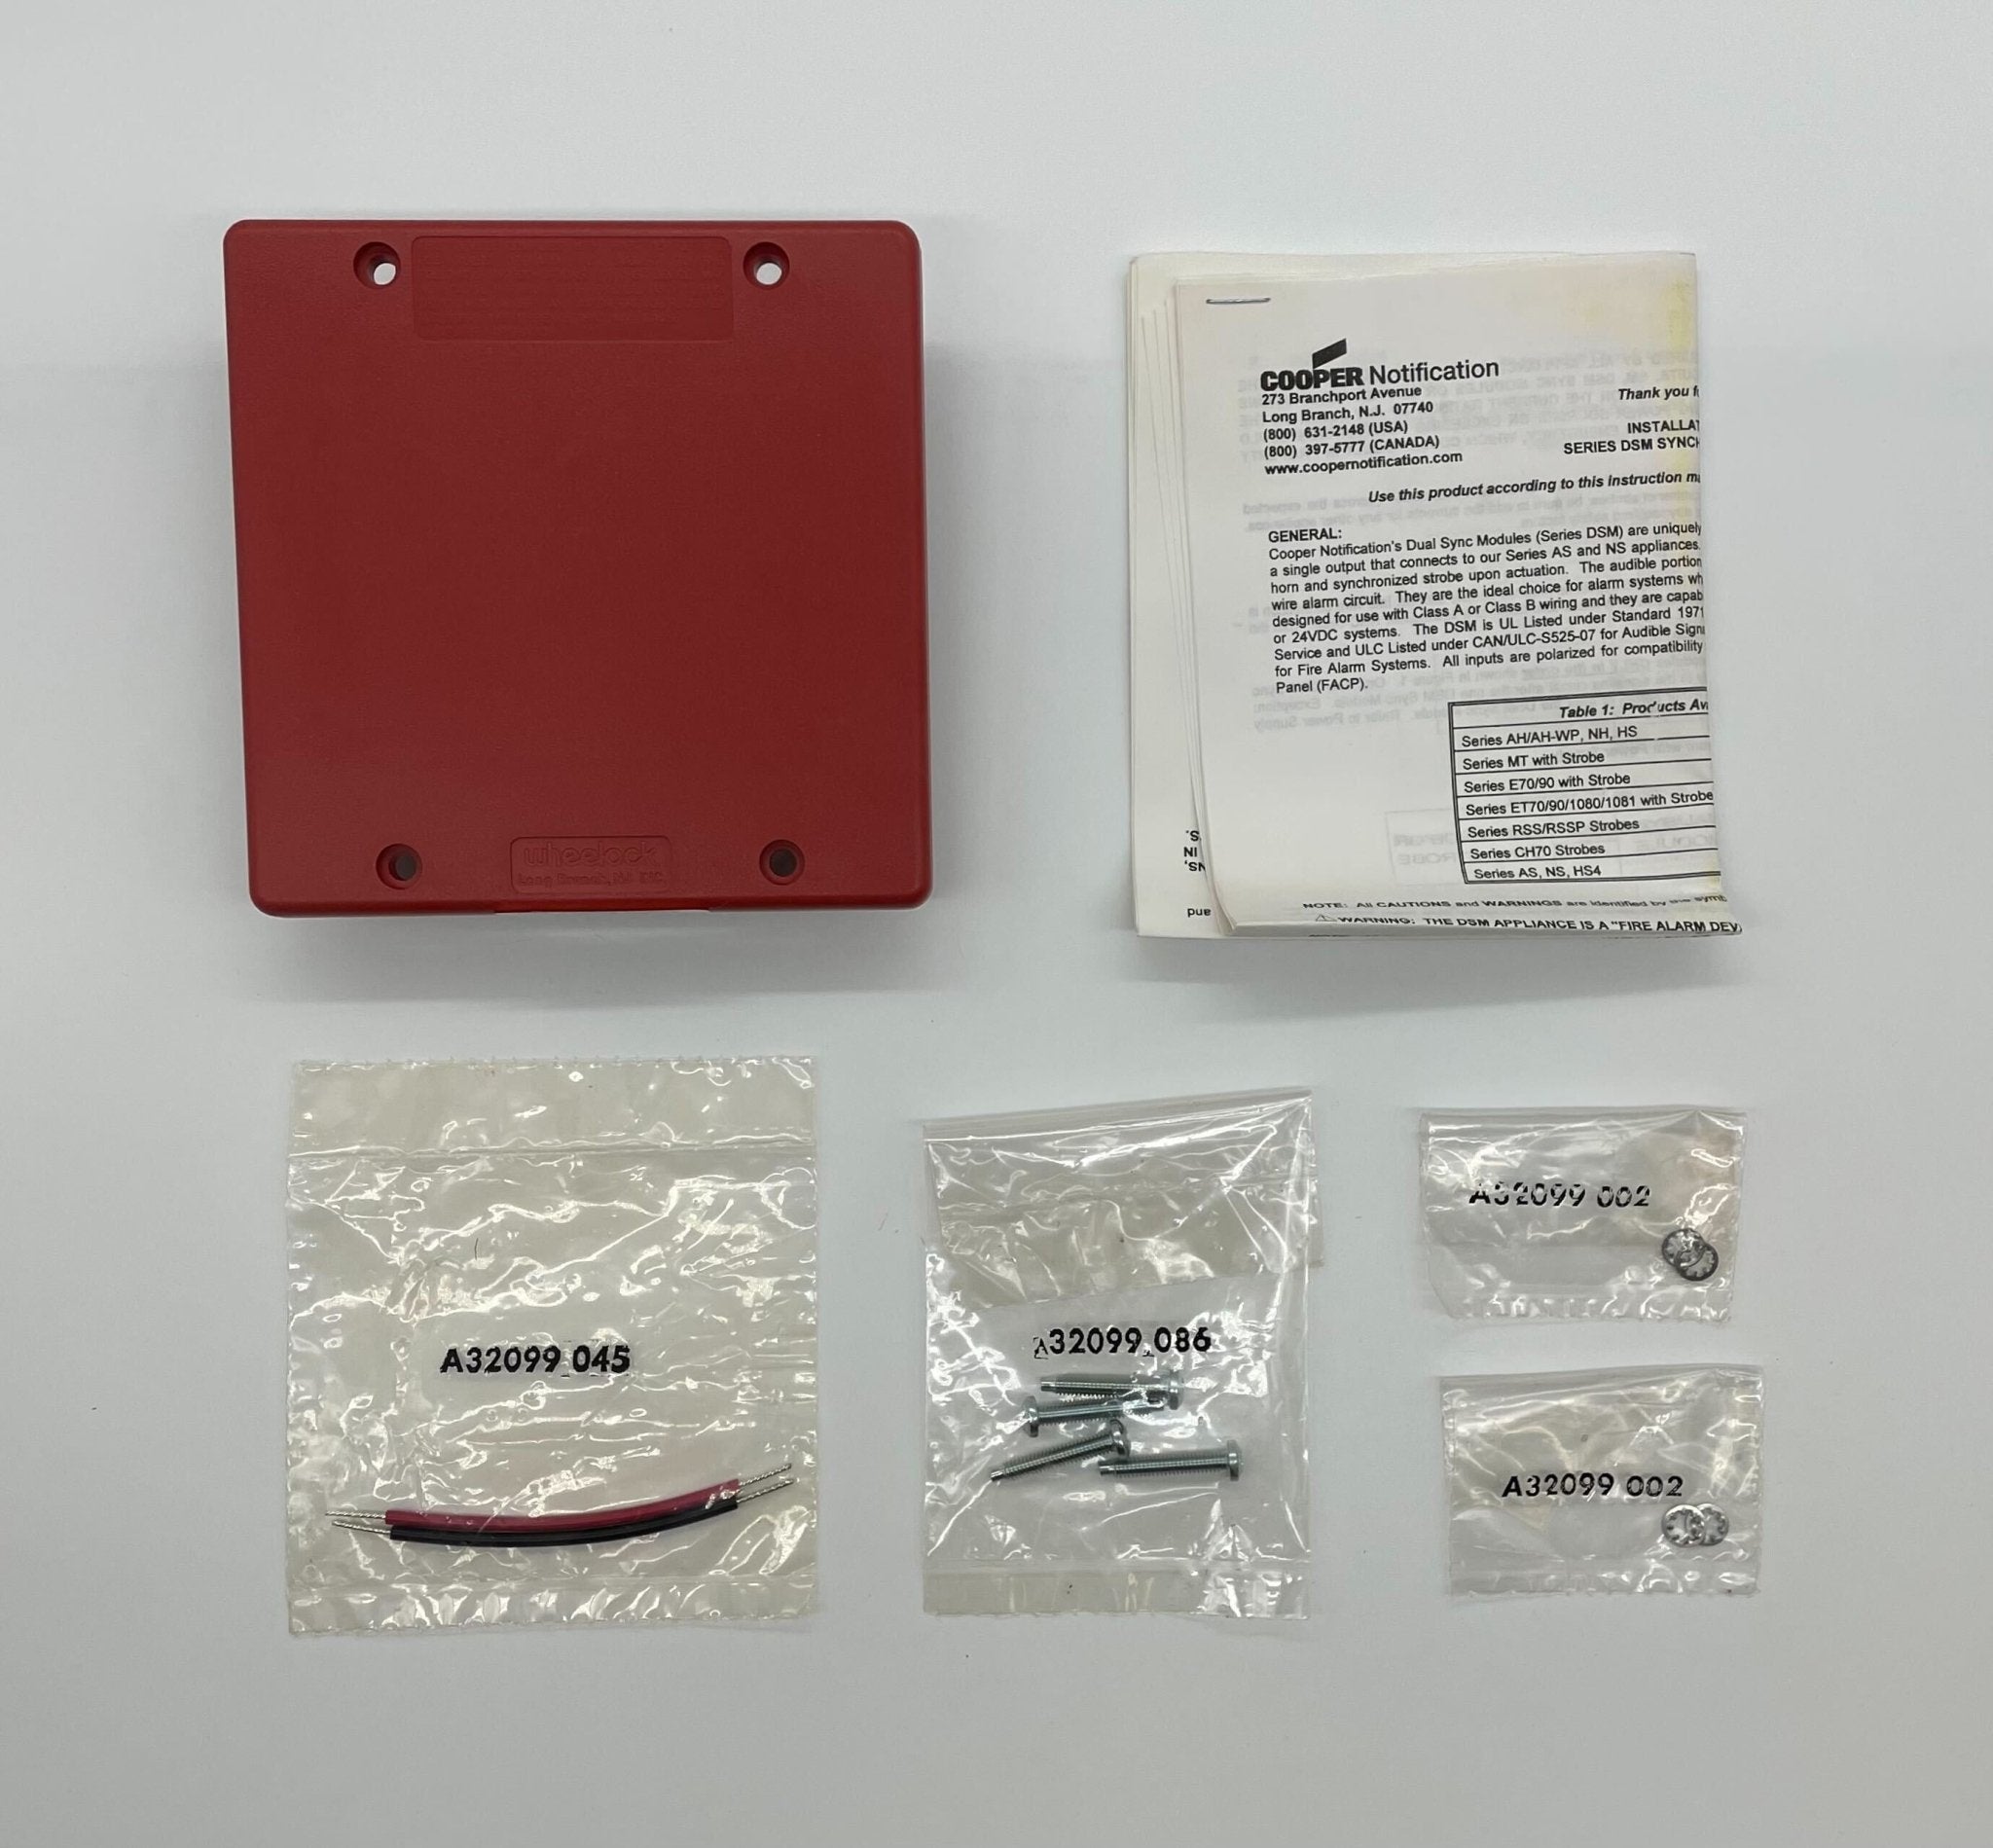 Wheelock DSM-12/24-R - The Fire Alarm Supplier